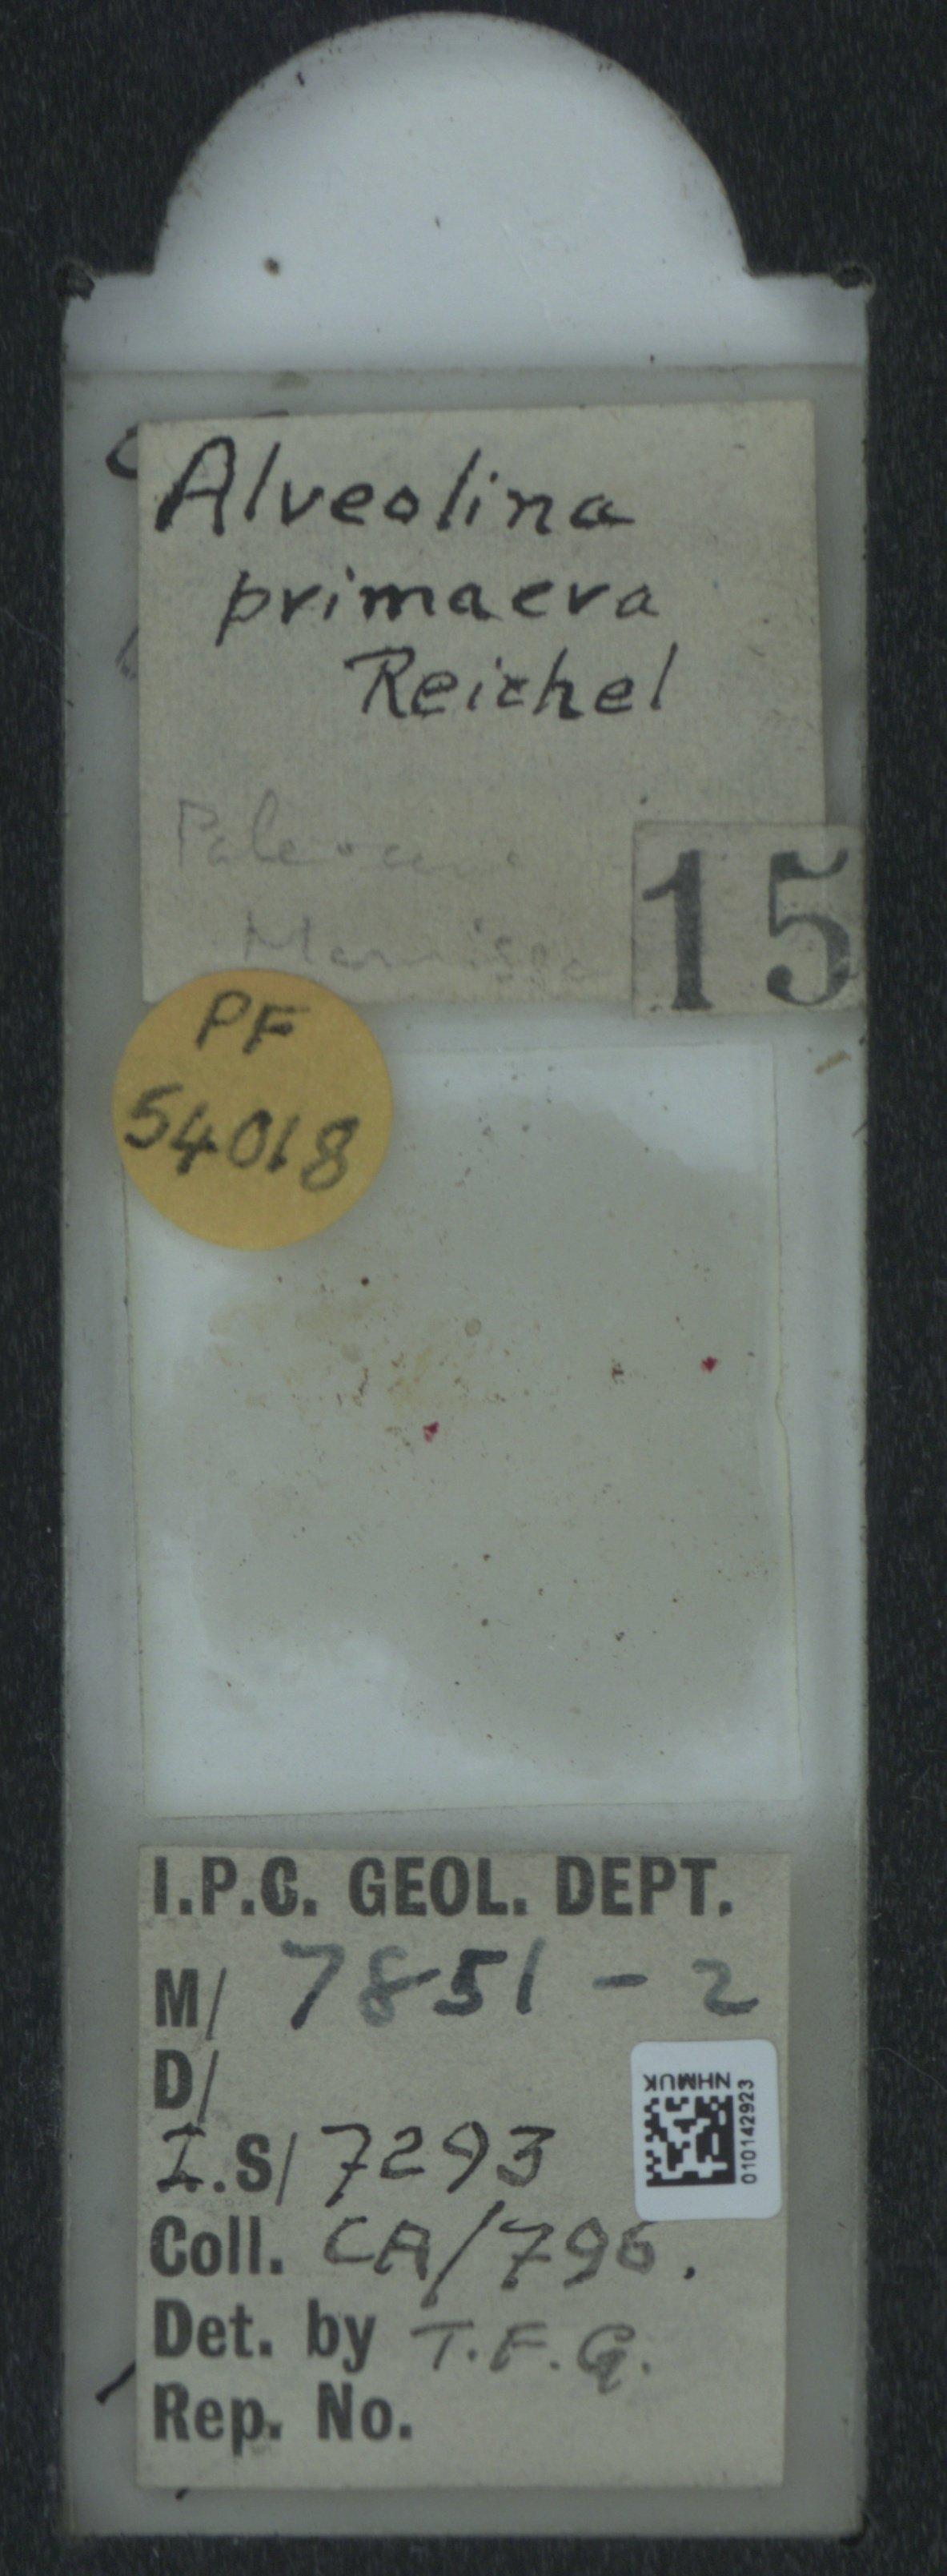 To NHMUK collection (Alveolina primaeva Reichel, 1936; NHMUK:ecatalogue:2031555)